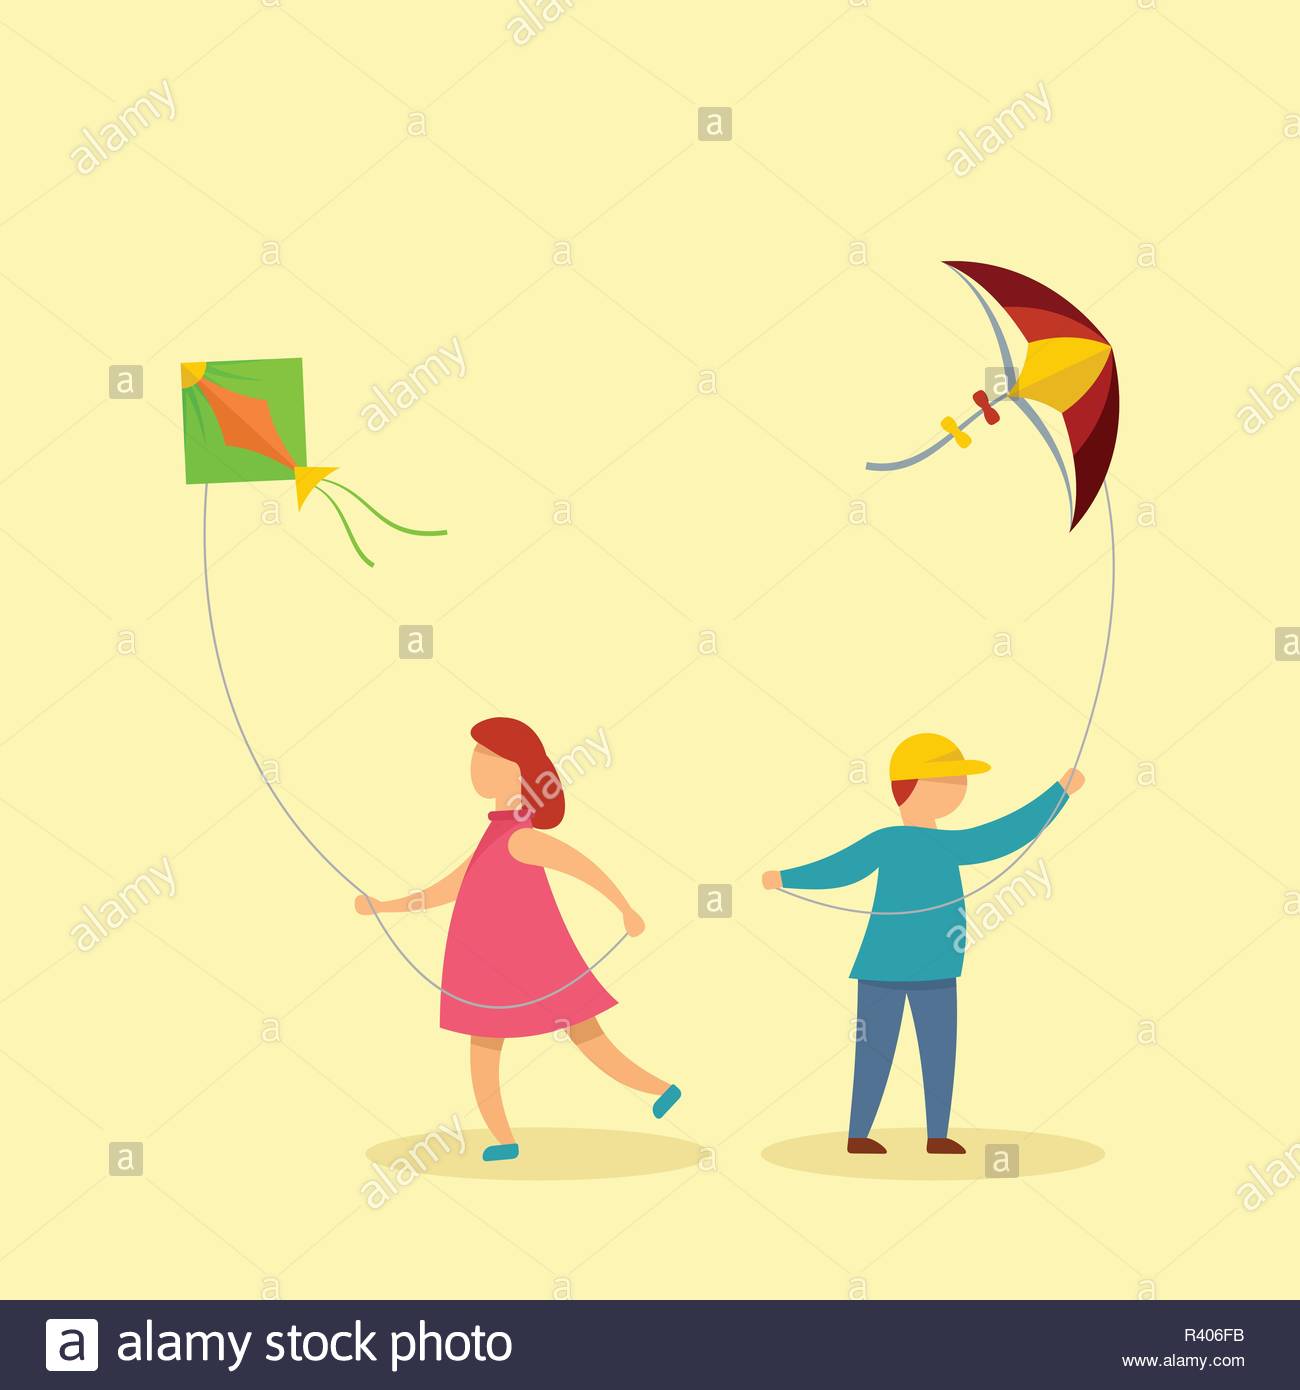 Children With Kites Background Flat Illustration Of